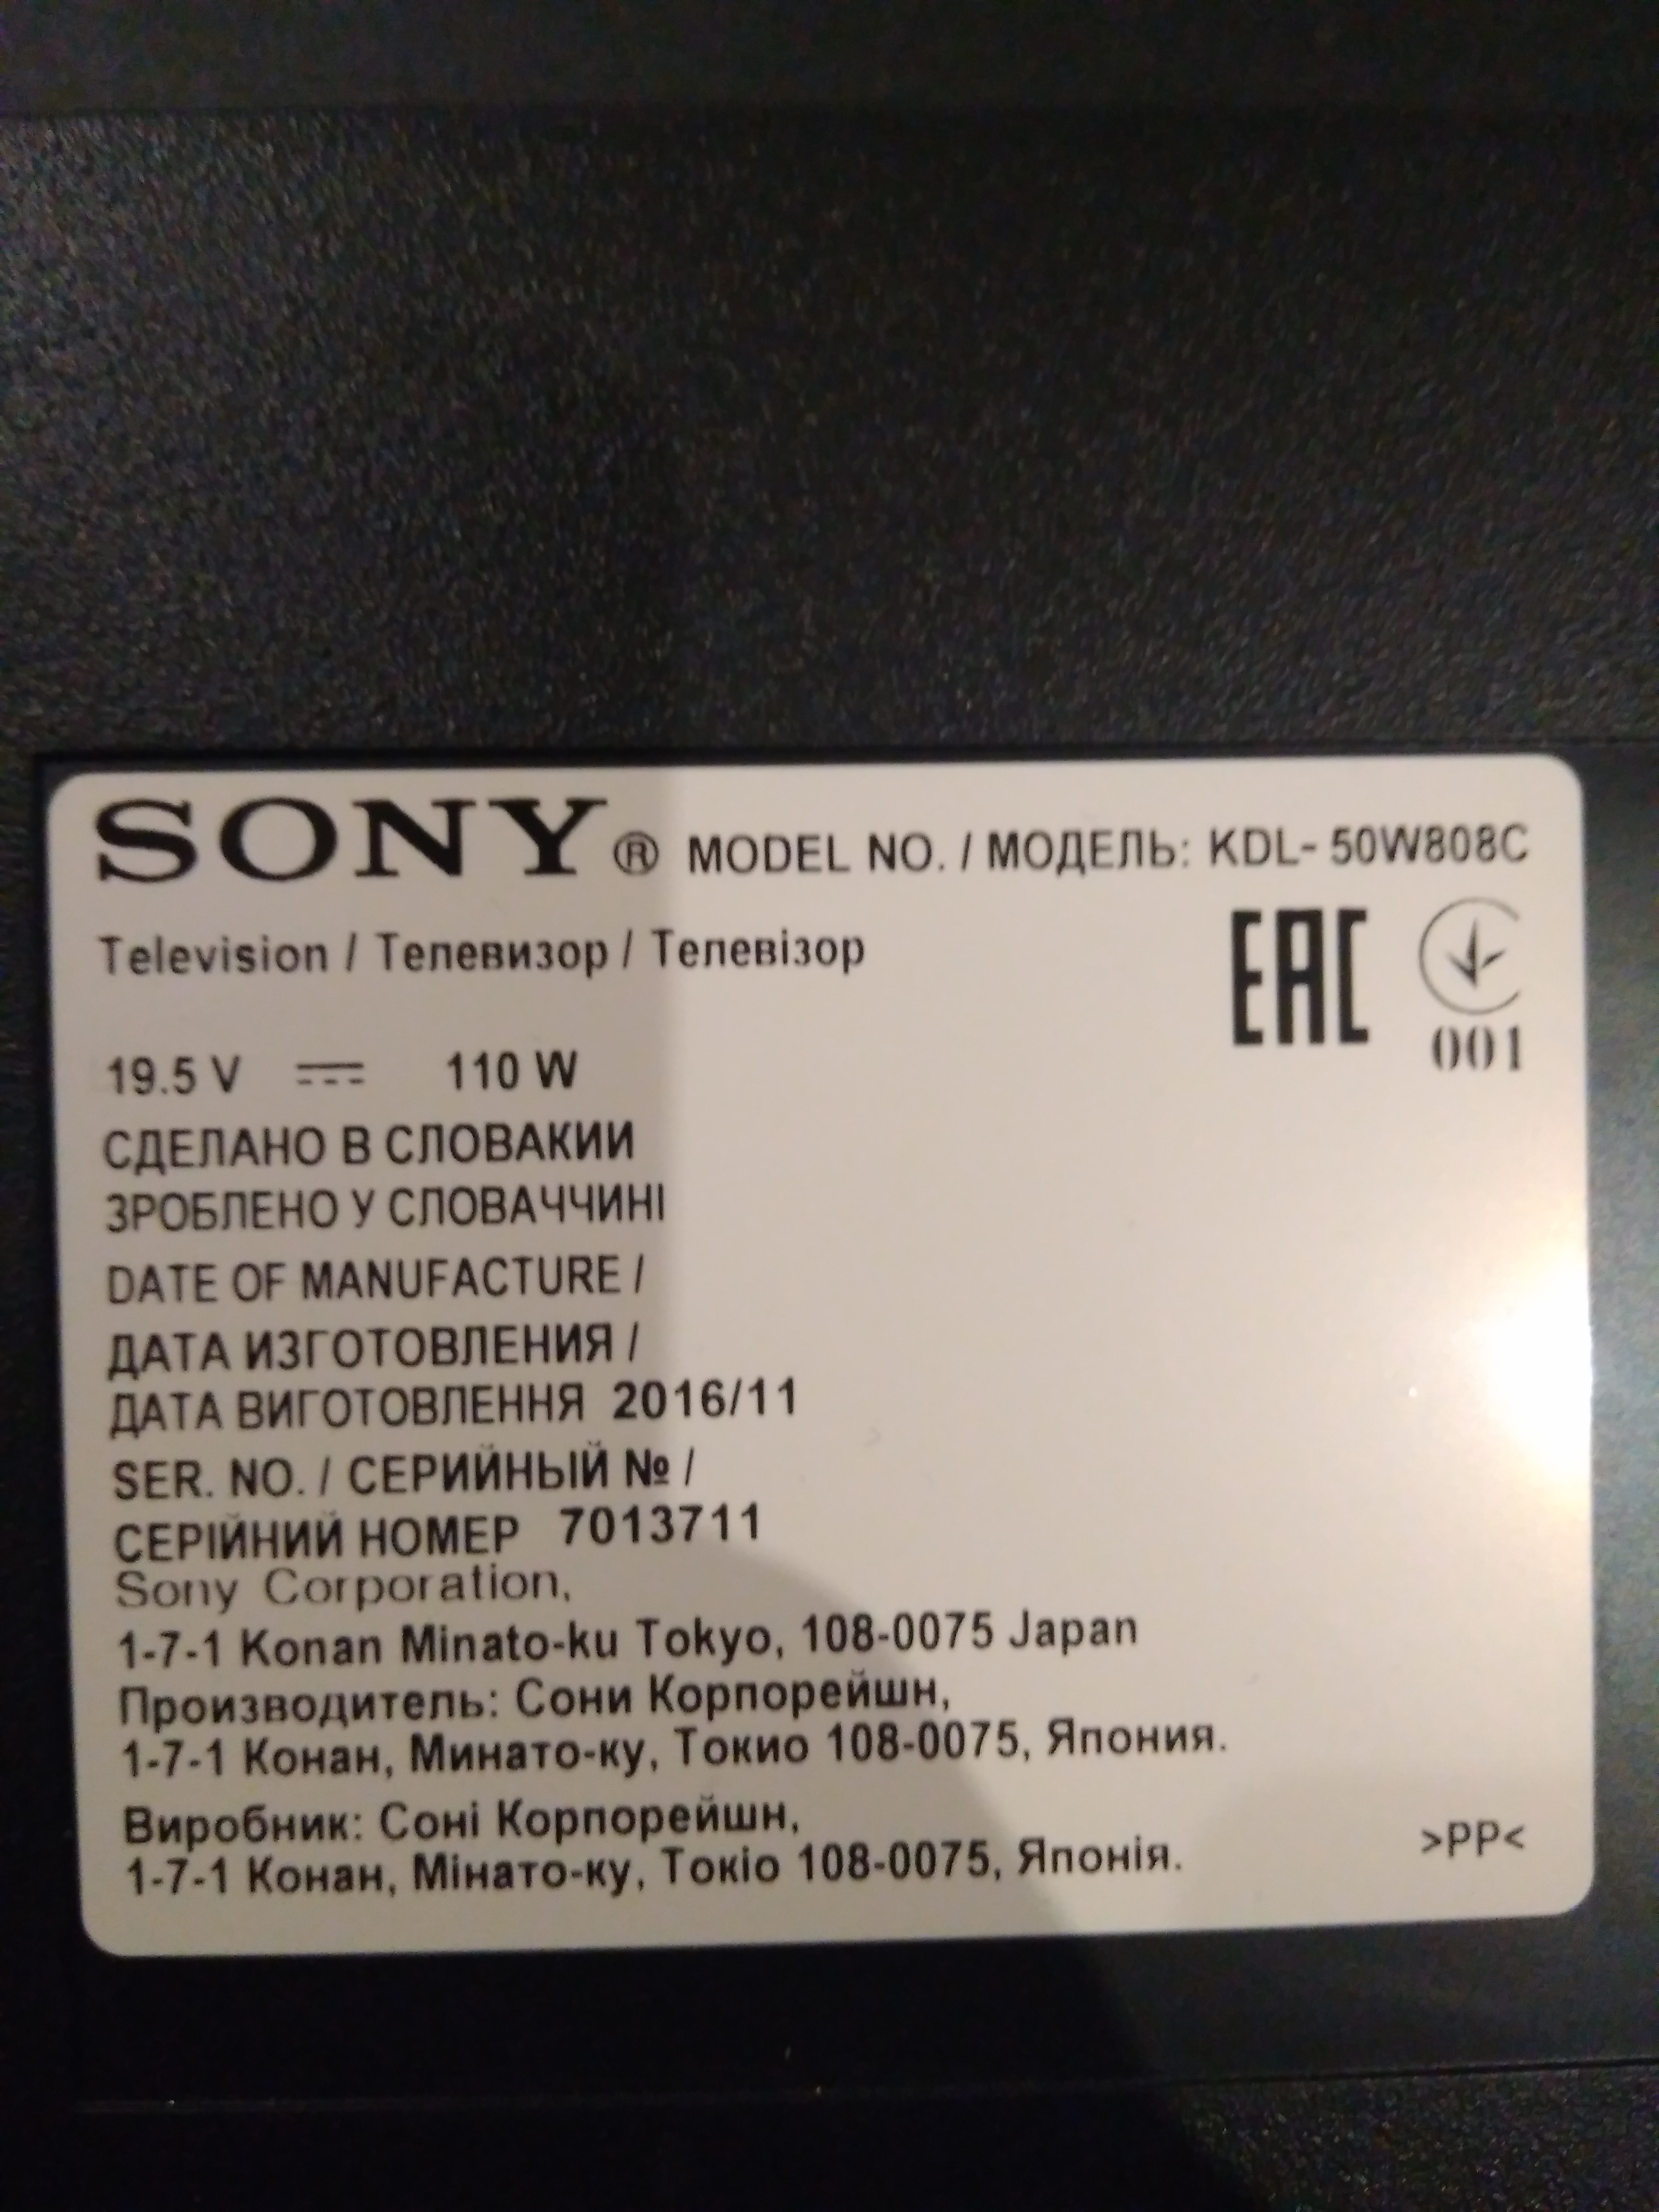 50 кдл. KDL-50w808c. Sony KDL-50w808c. Sony 50kdl808c. Sony KDL 50w755c.